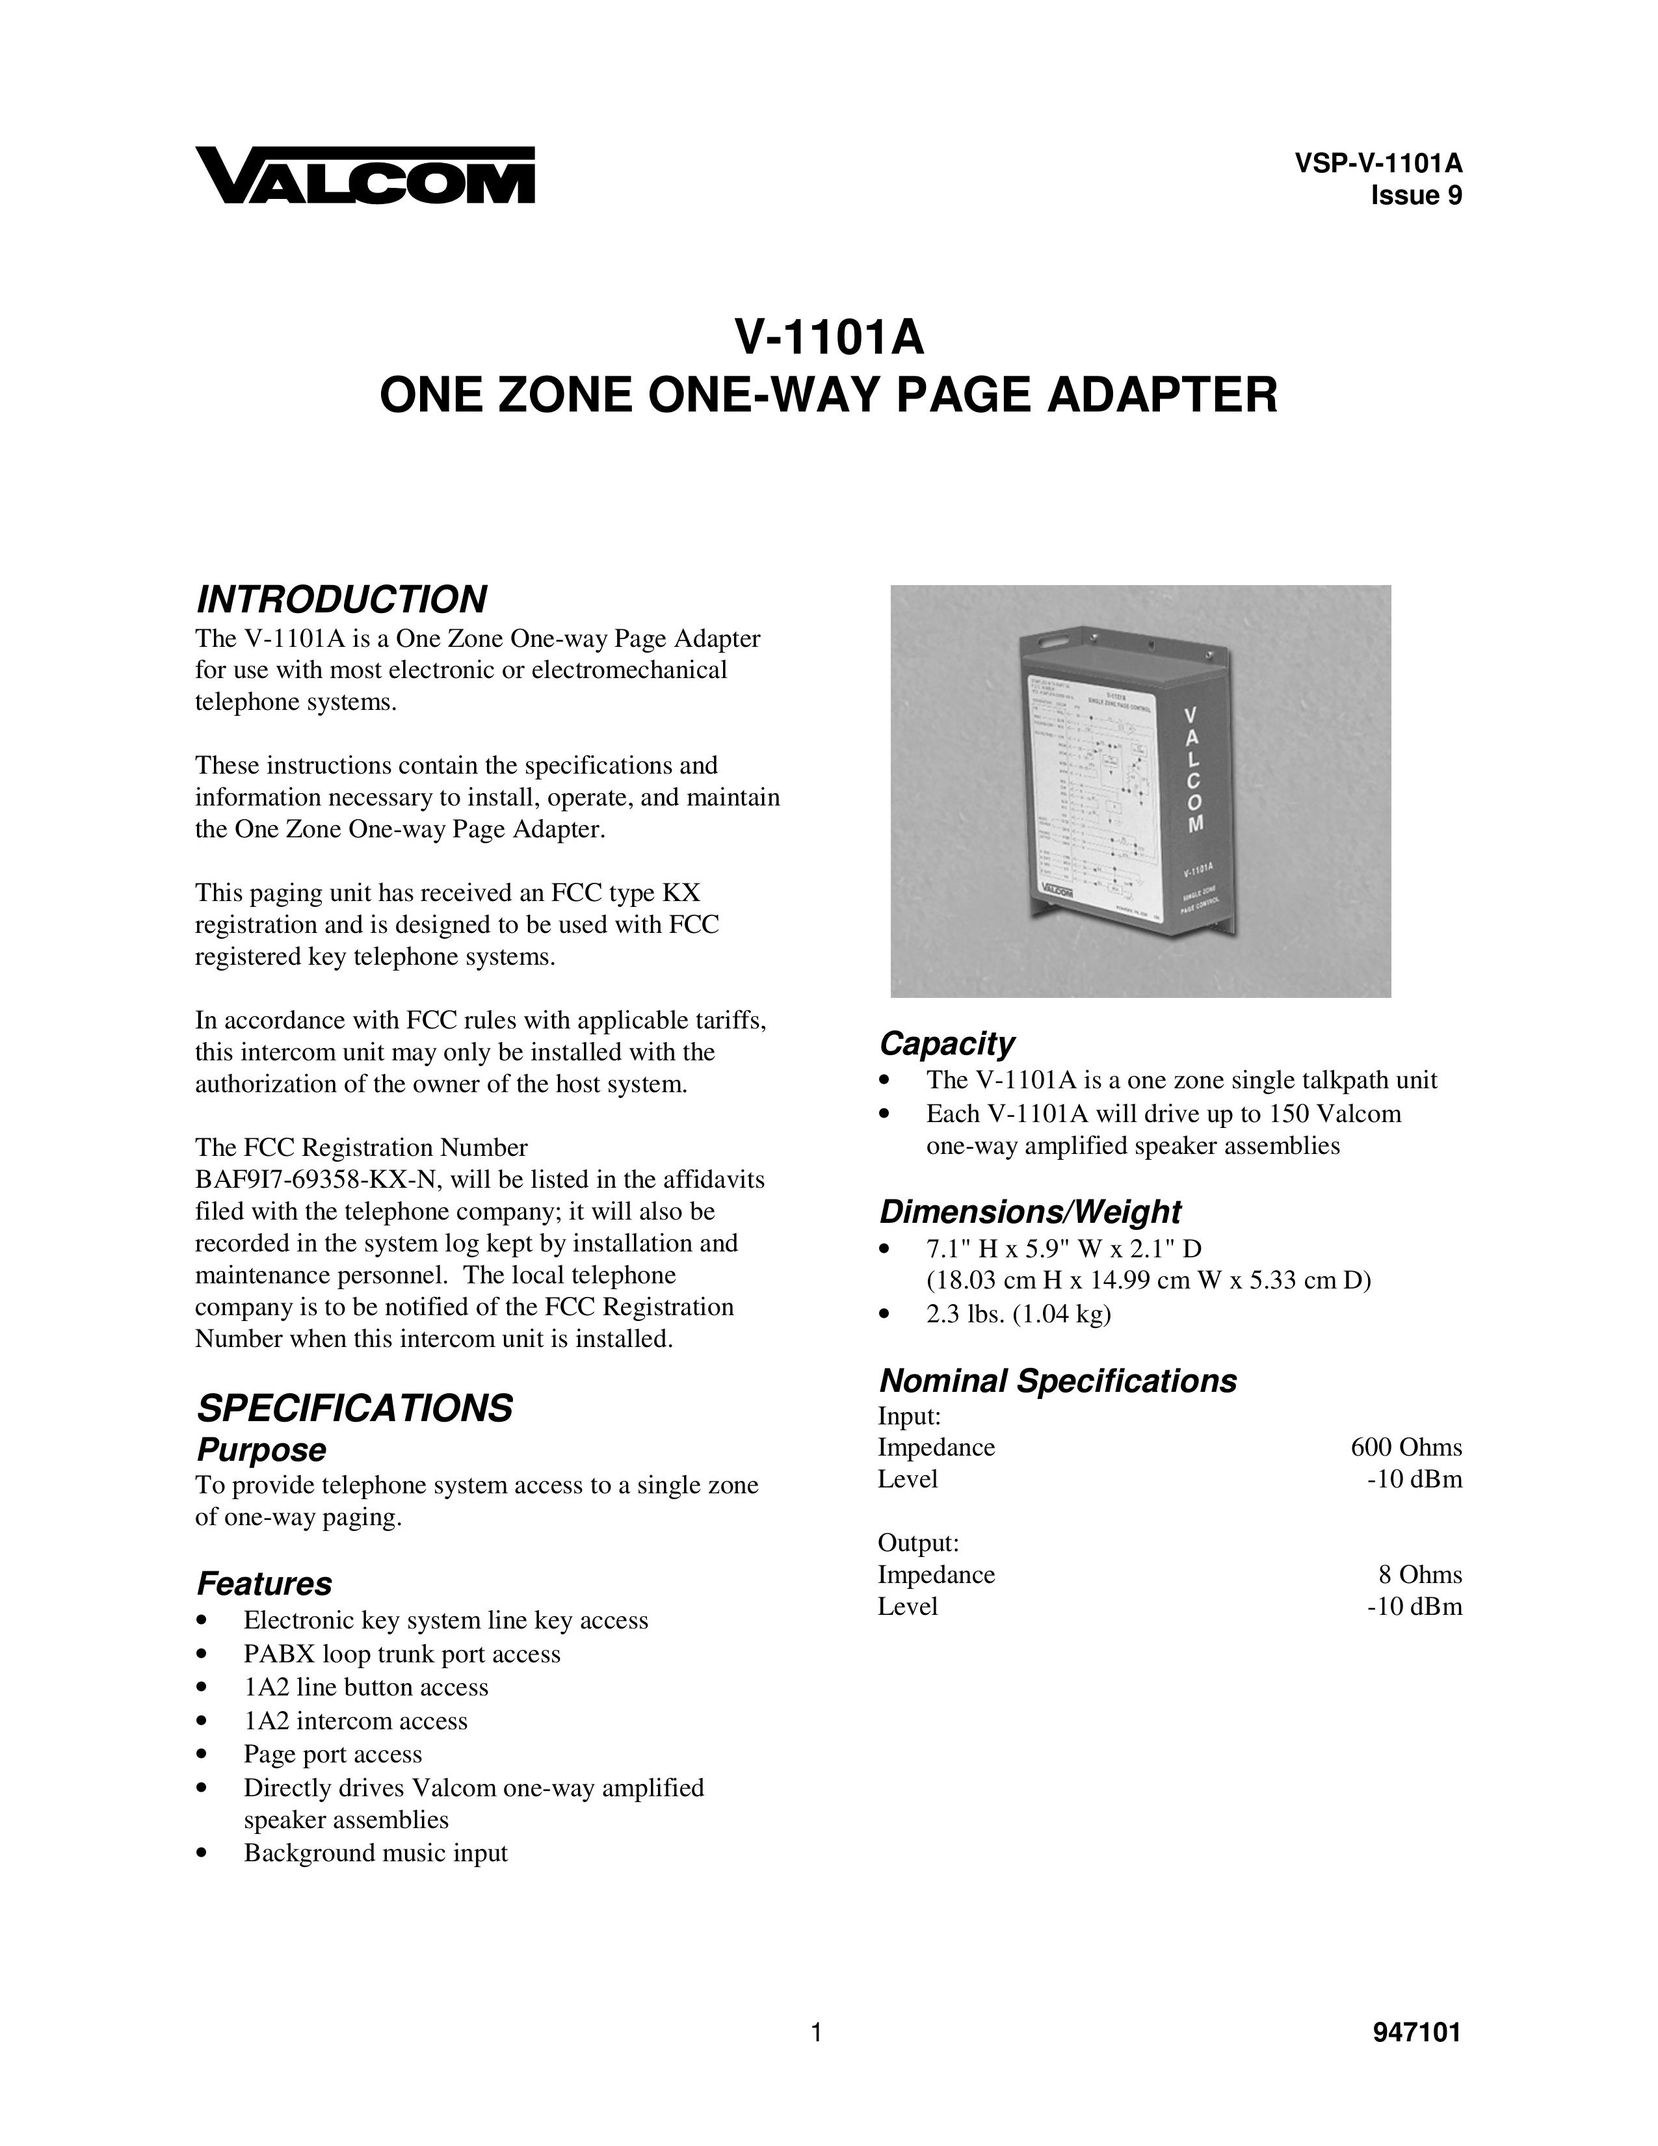 Valcom V-1101A Pager User Manual